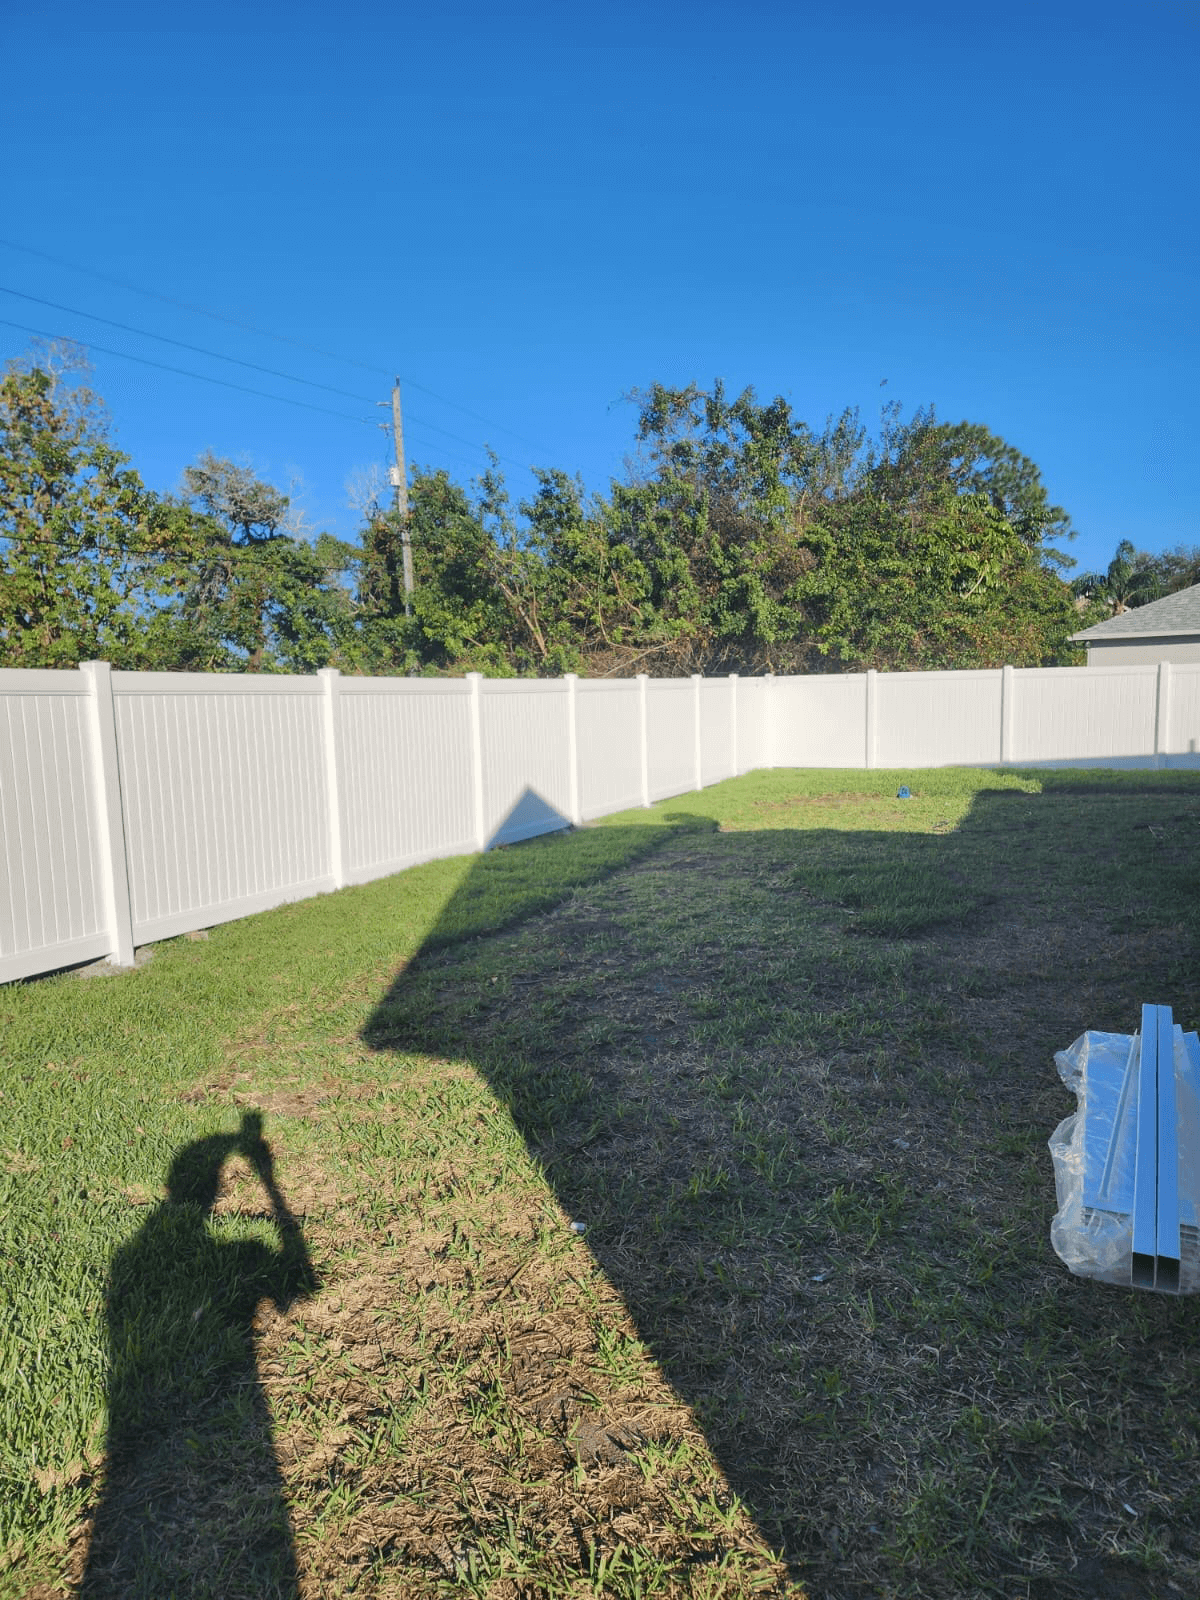 Installed vinyl fences